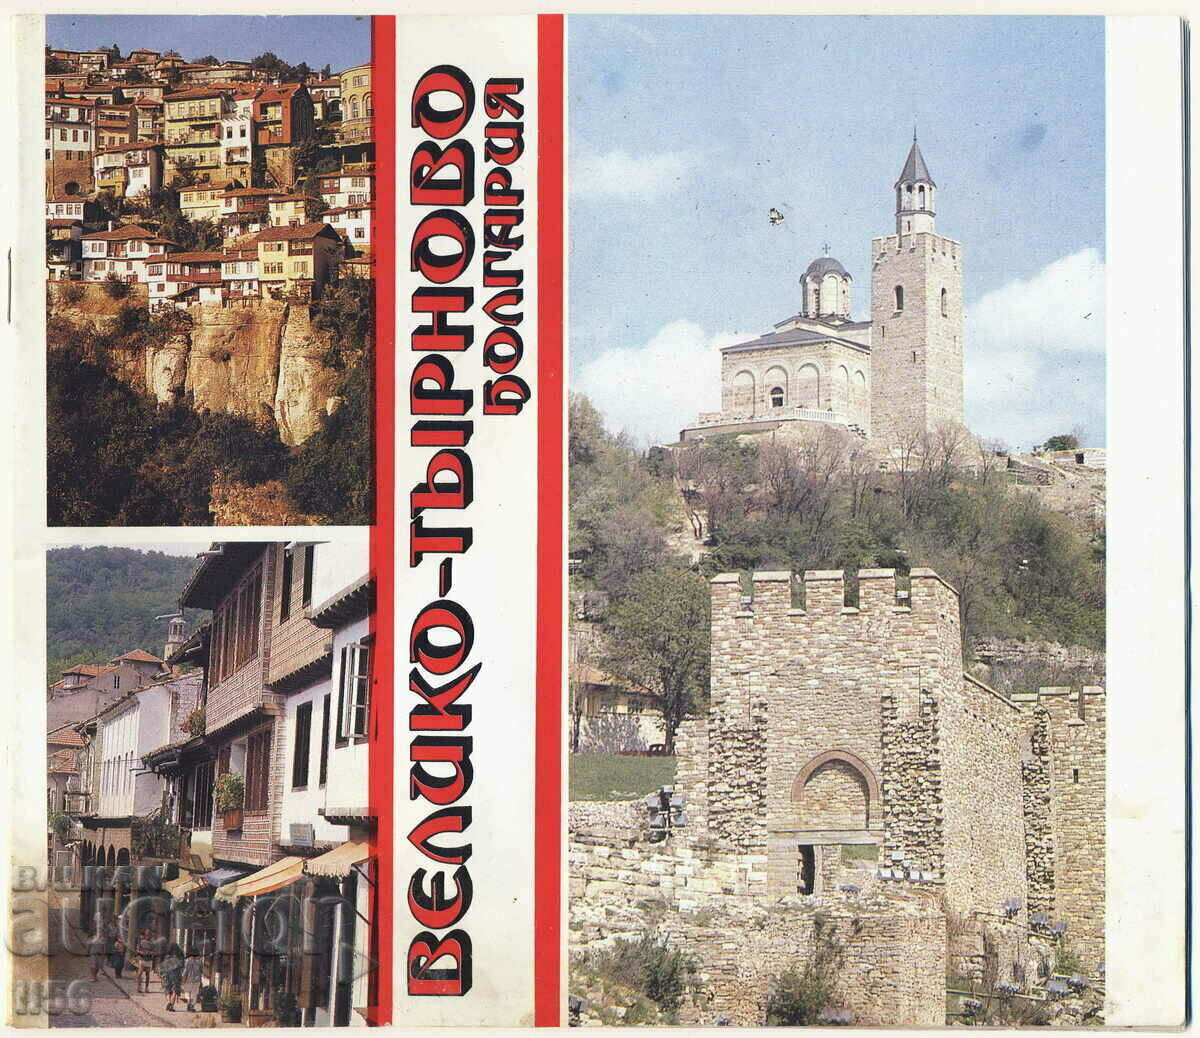 Brochure - Veliko Tarnovo - Balkantourist approx. 1980